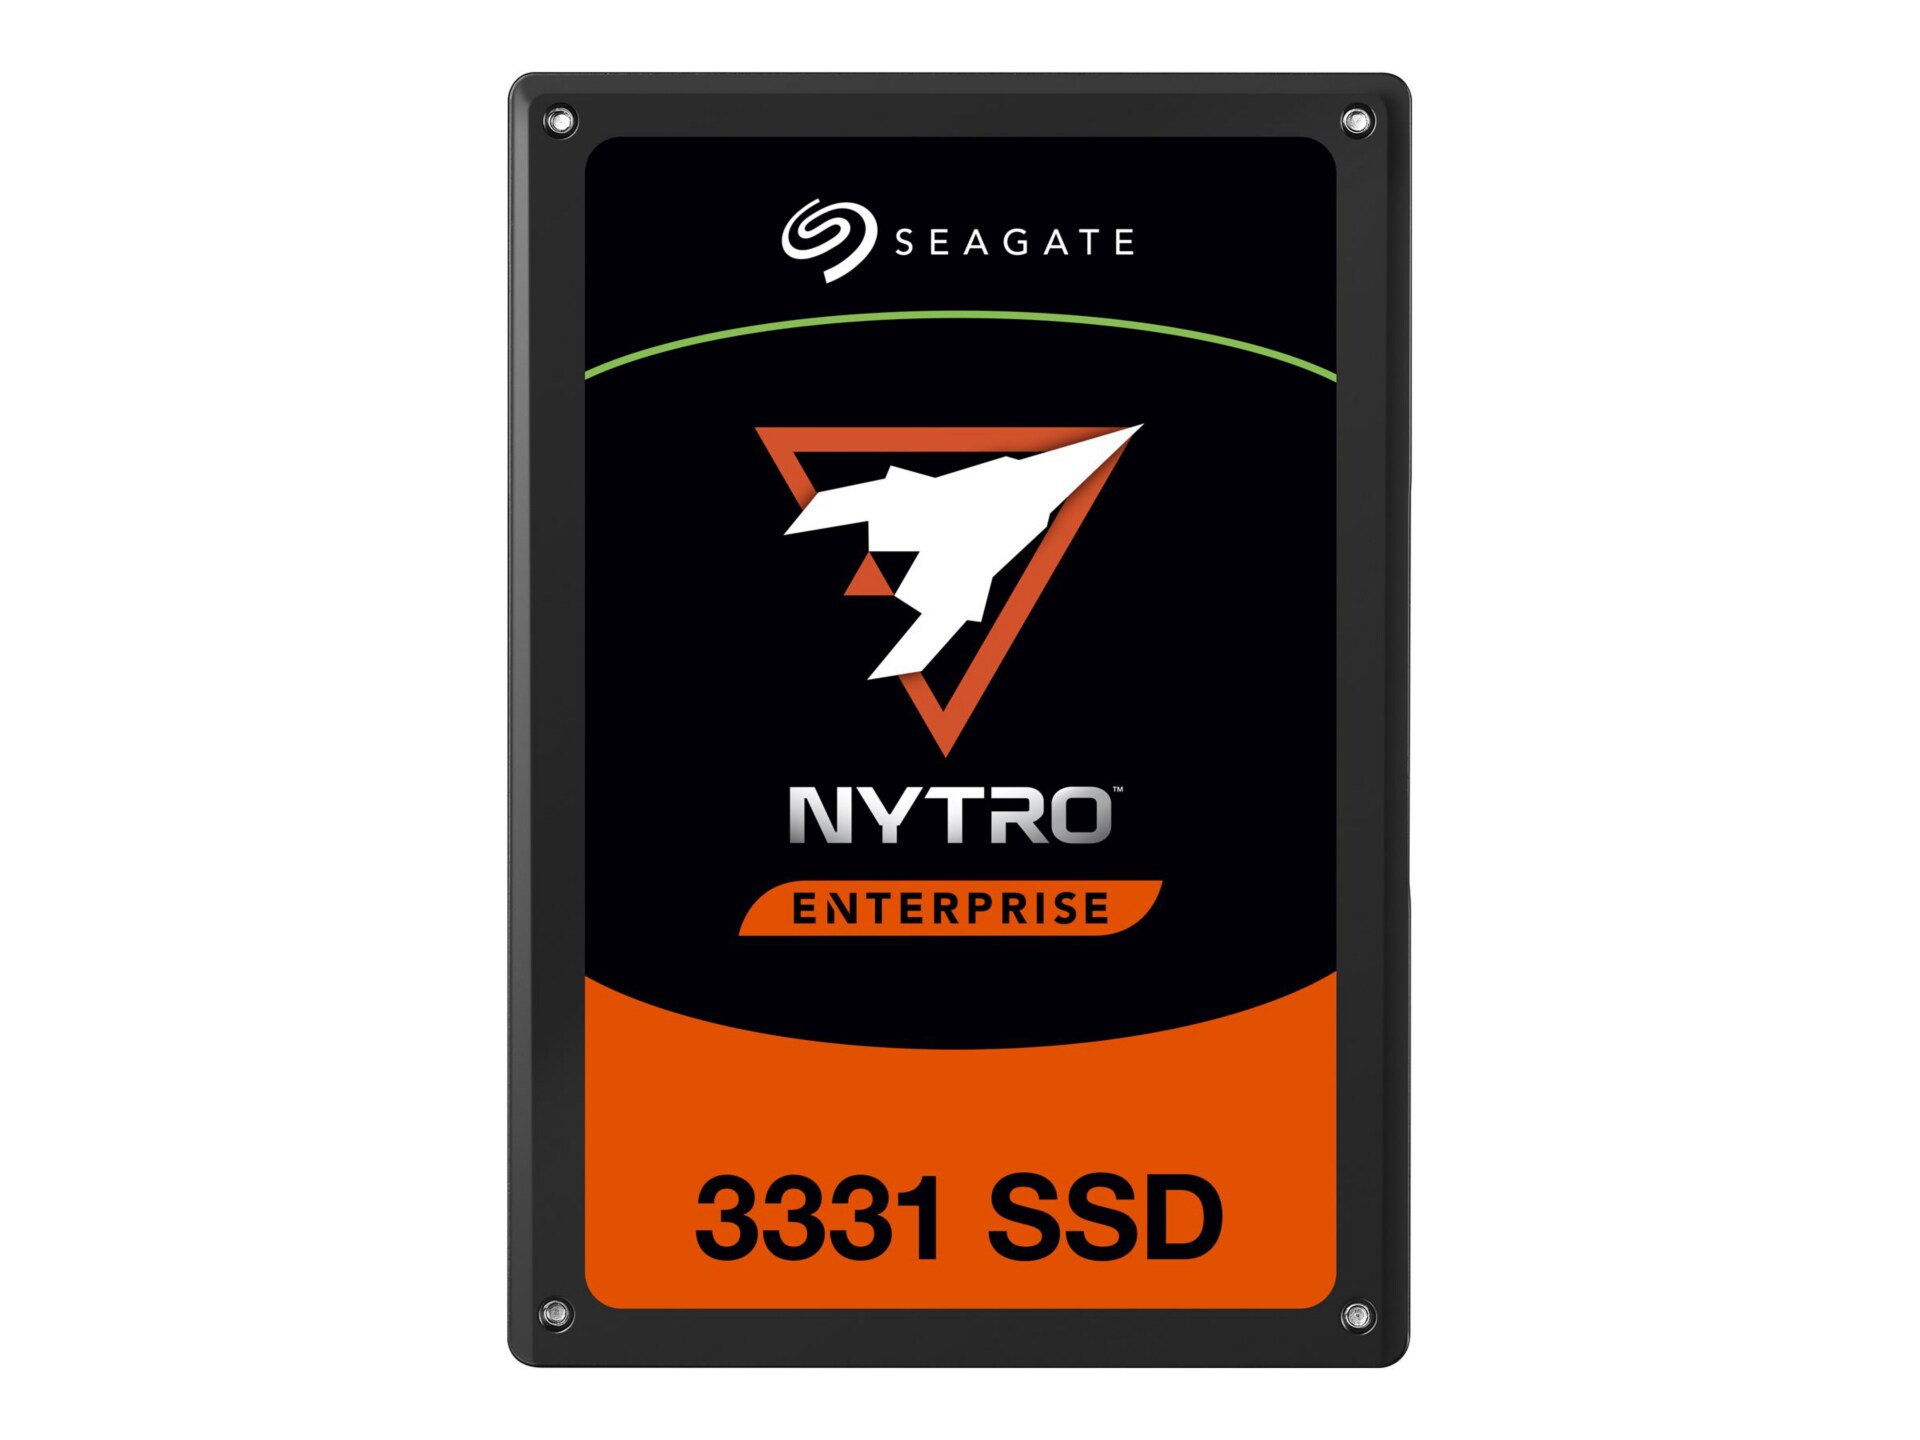 Seagate Nytro 3331 XS3840SE70004 - solid state drive - 3.84 TB - SAS 12Gb/s